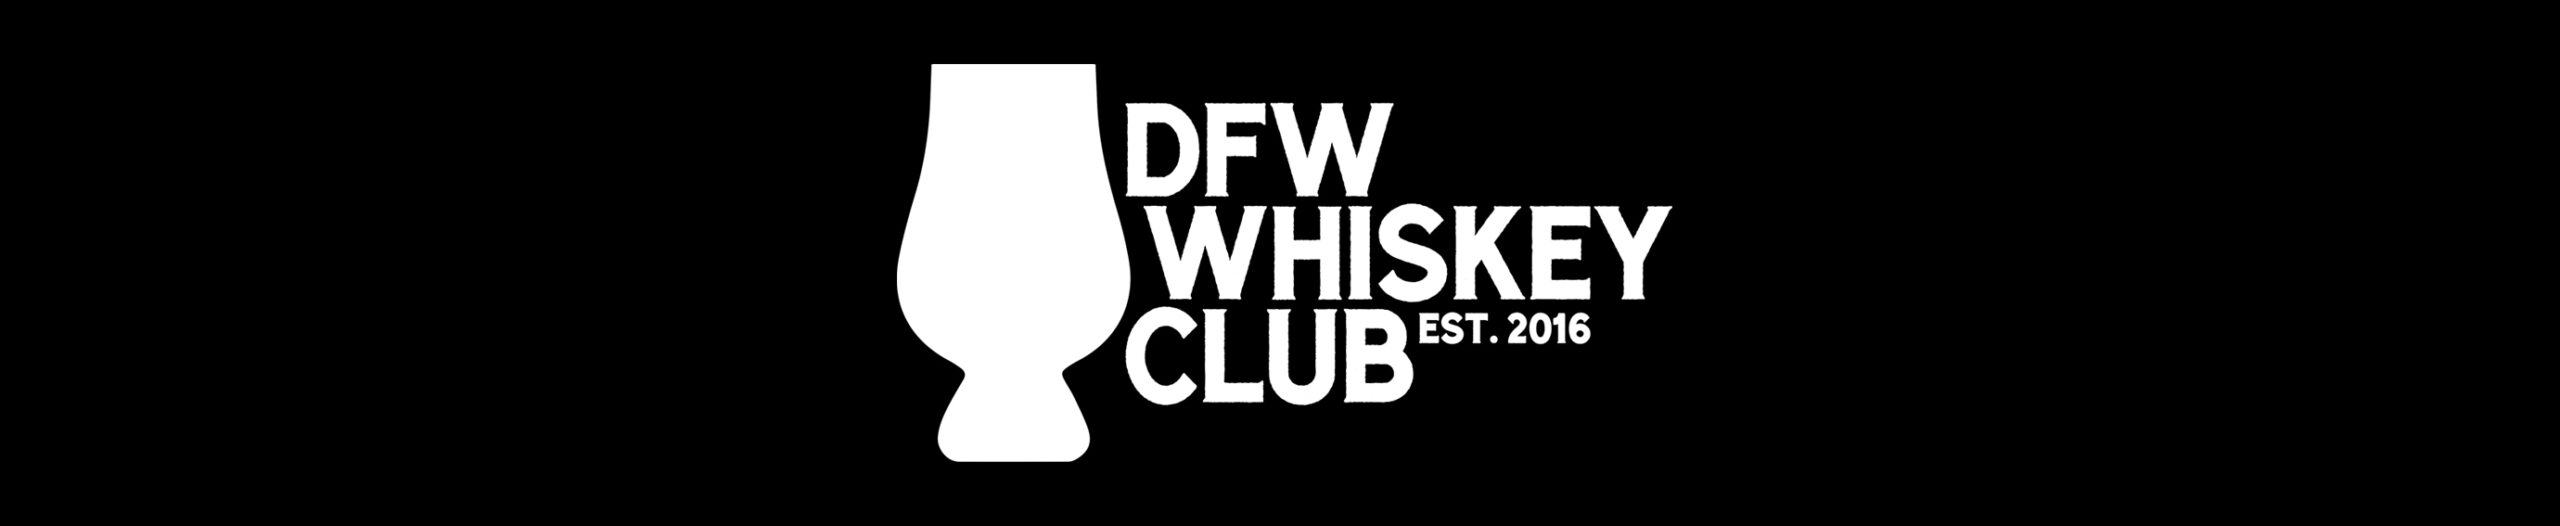 DFW Whiskey Club